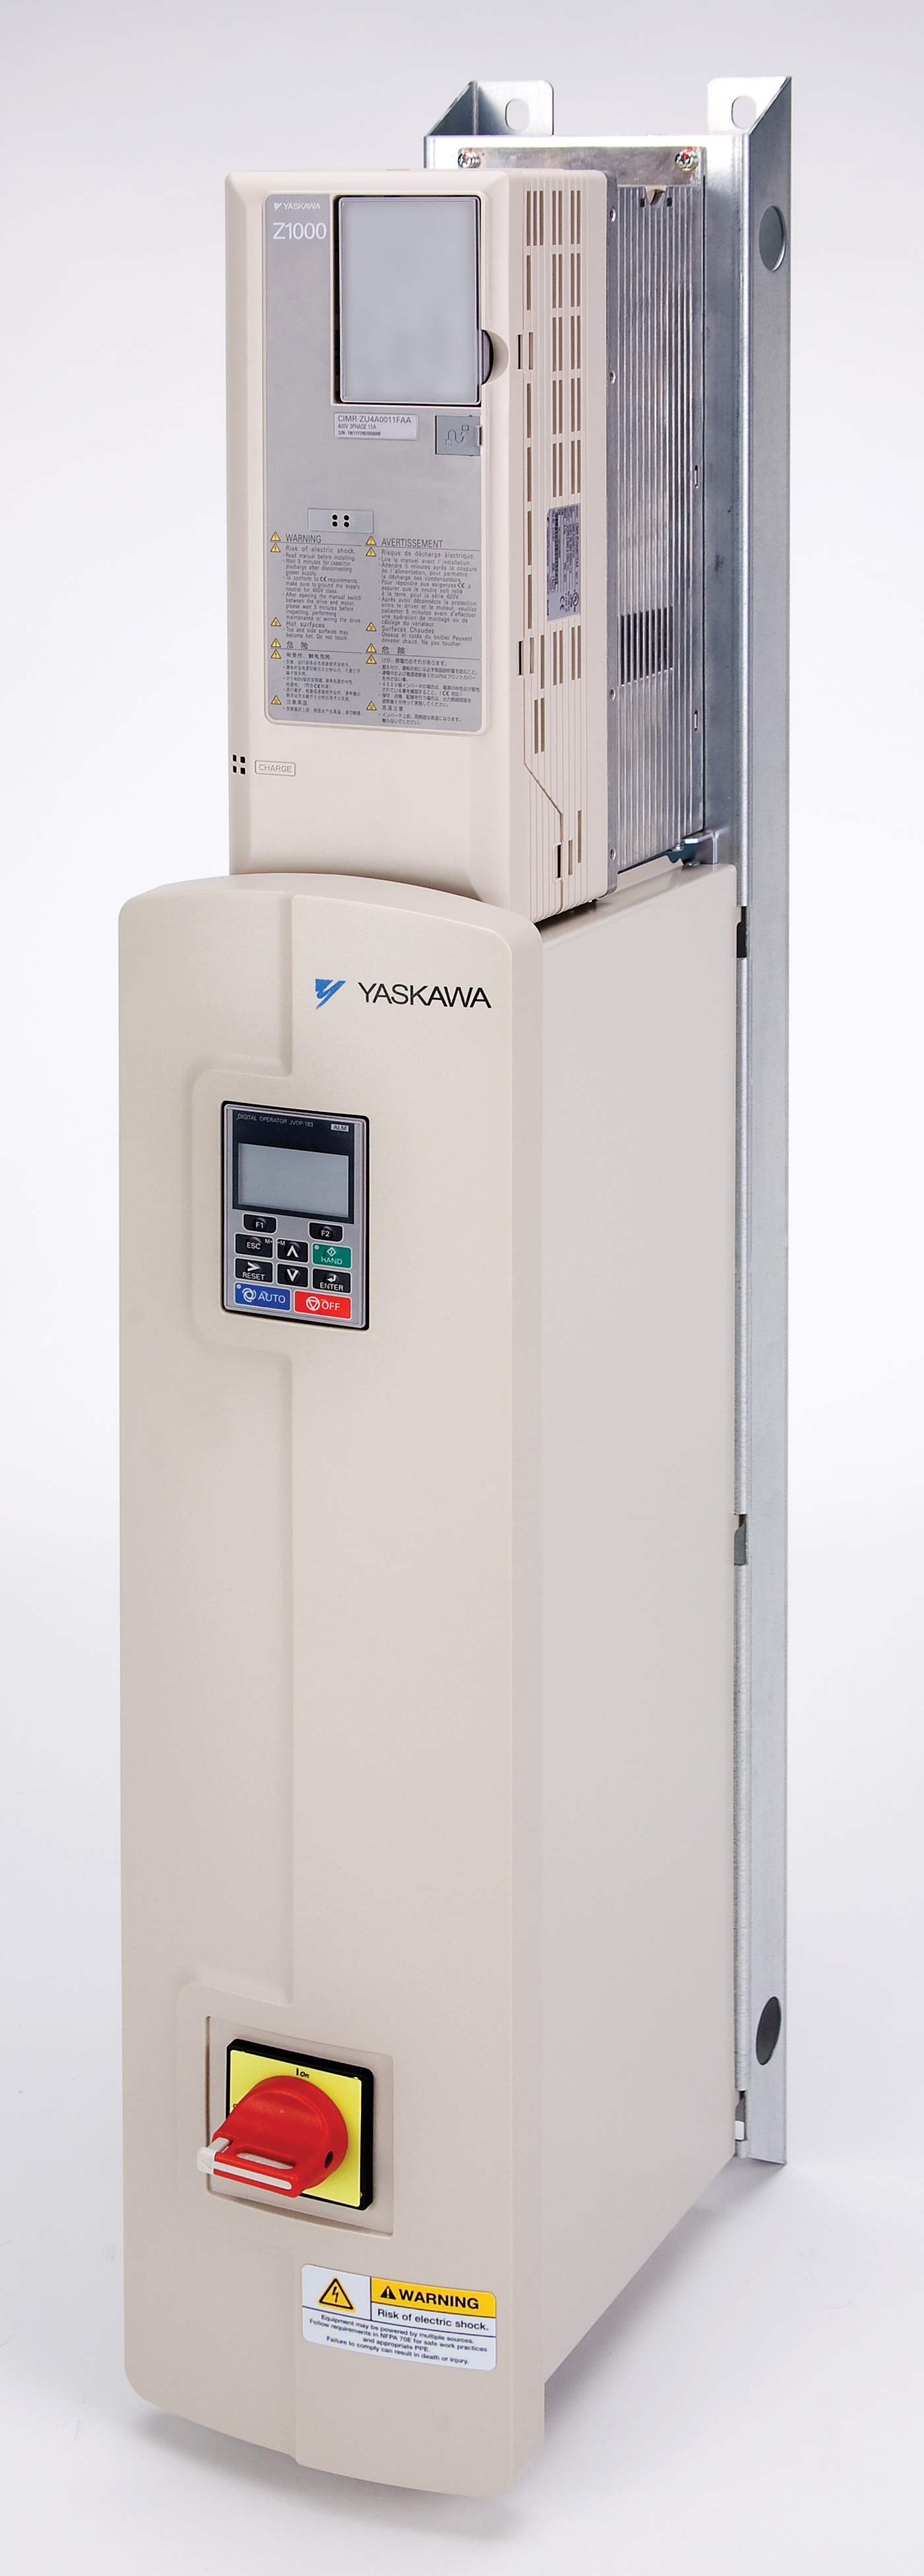 Yaskawa Variable Frequency Drive (VFD)